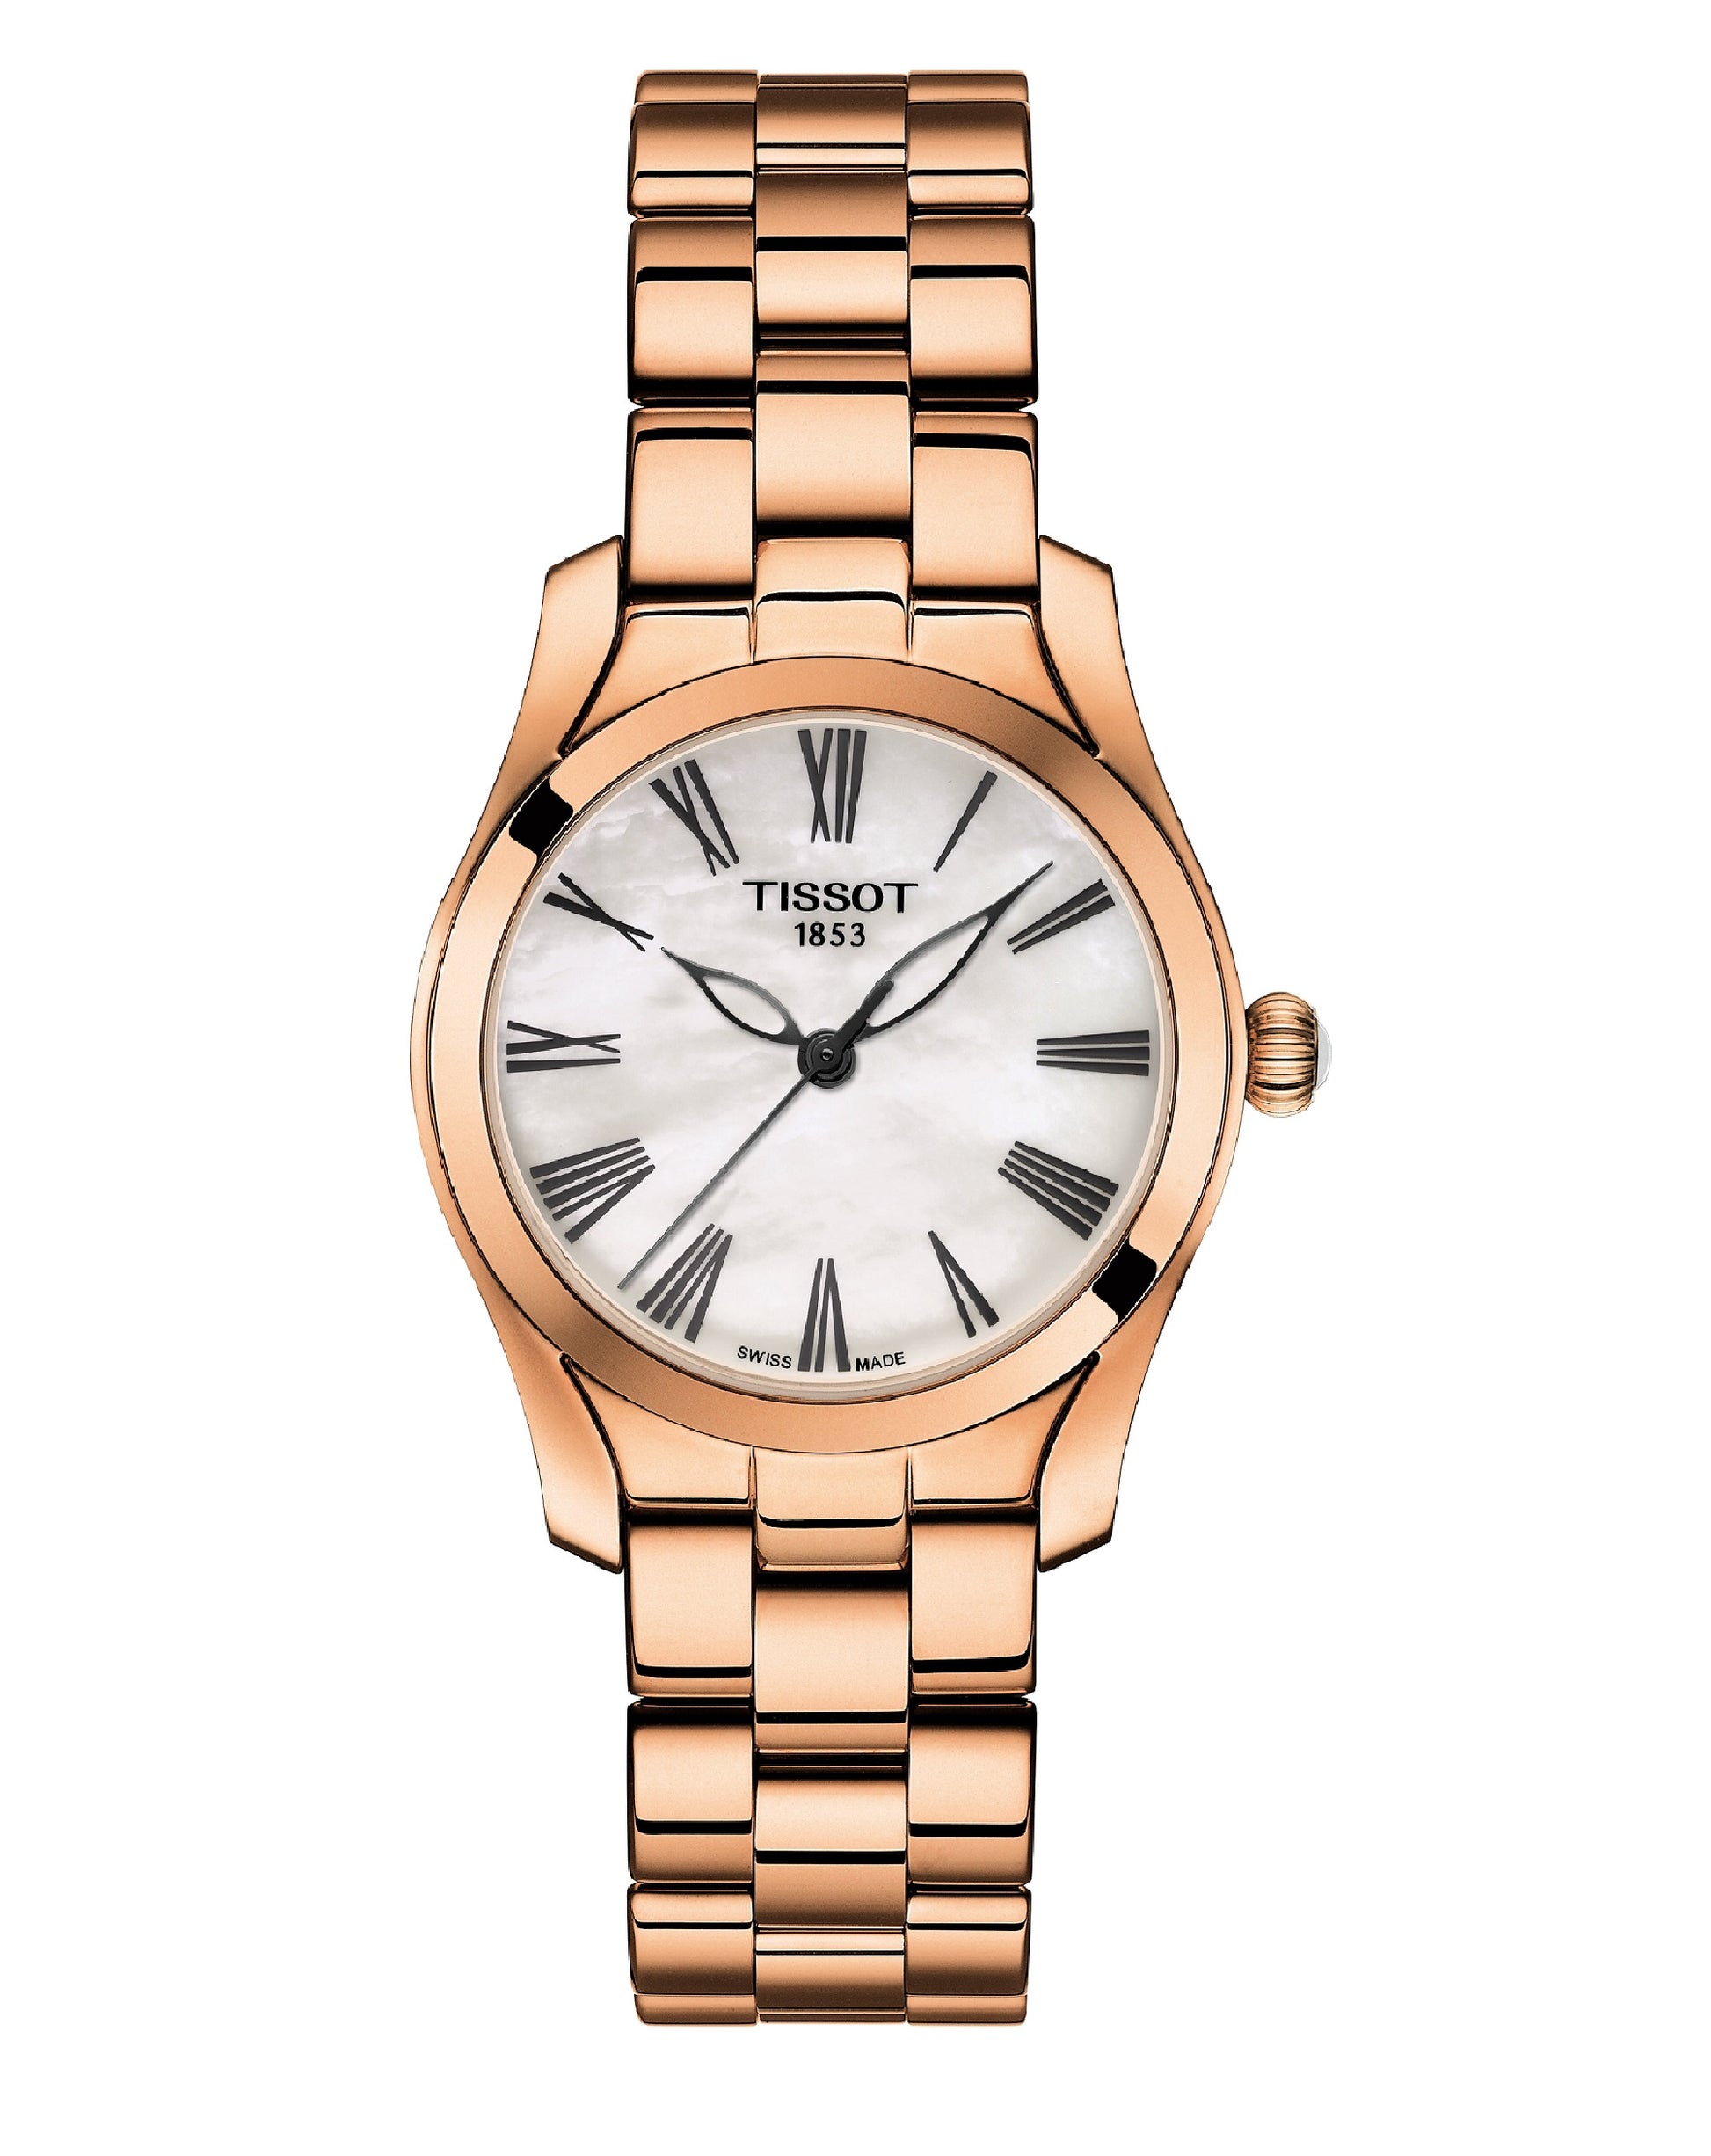 Tissot T112.210.33.113.00 Tissot T-Wave LADY'S Rose GOLD Tone Watch